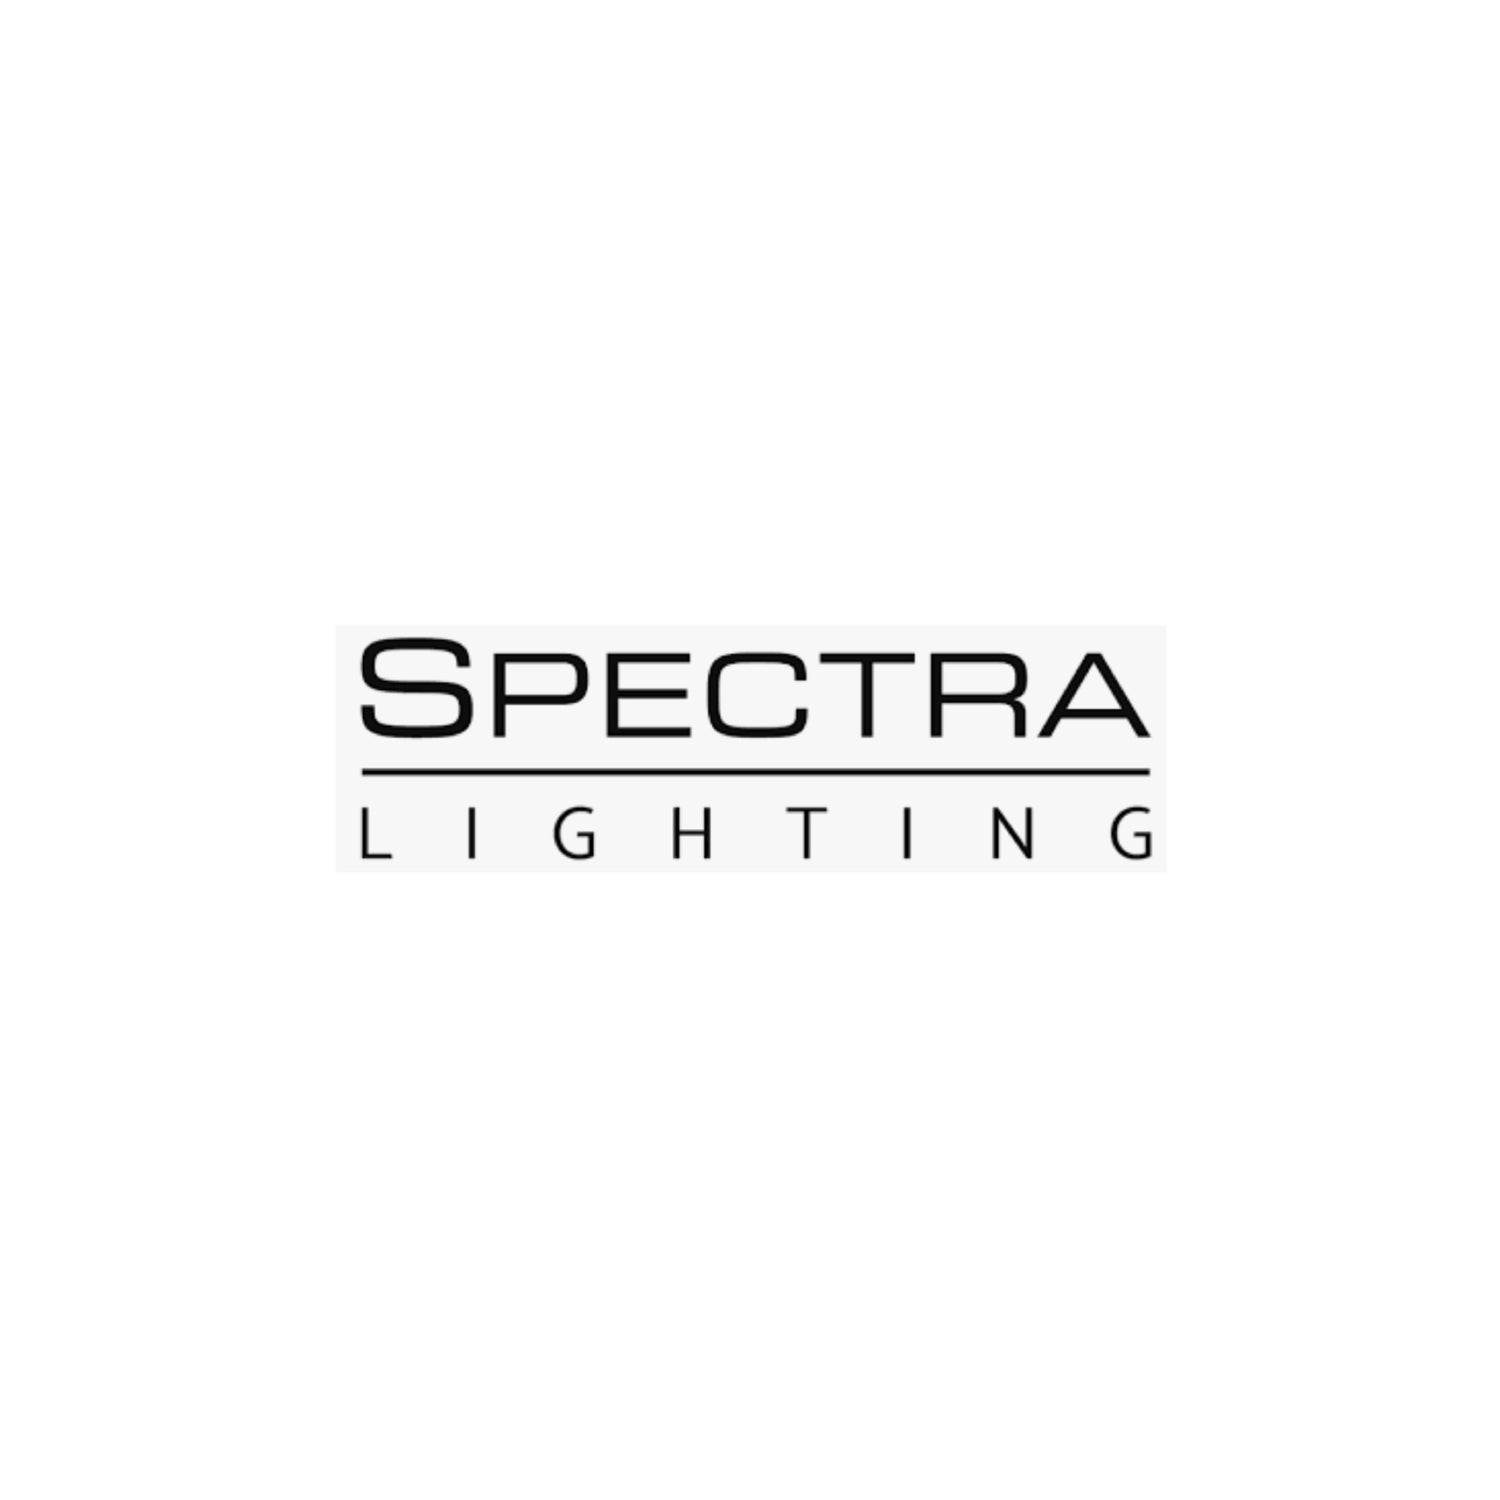 SPECTRA LIGHTING INC.